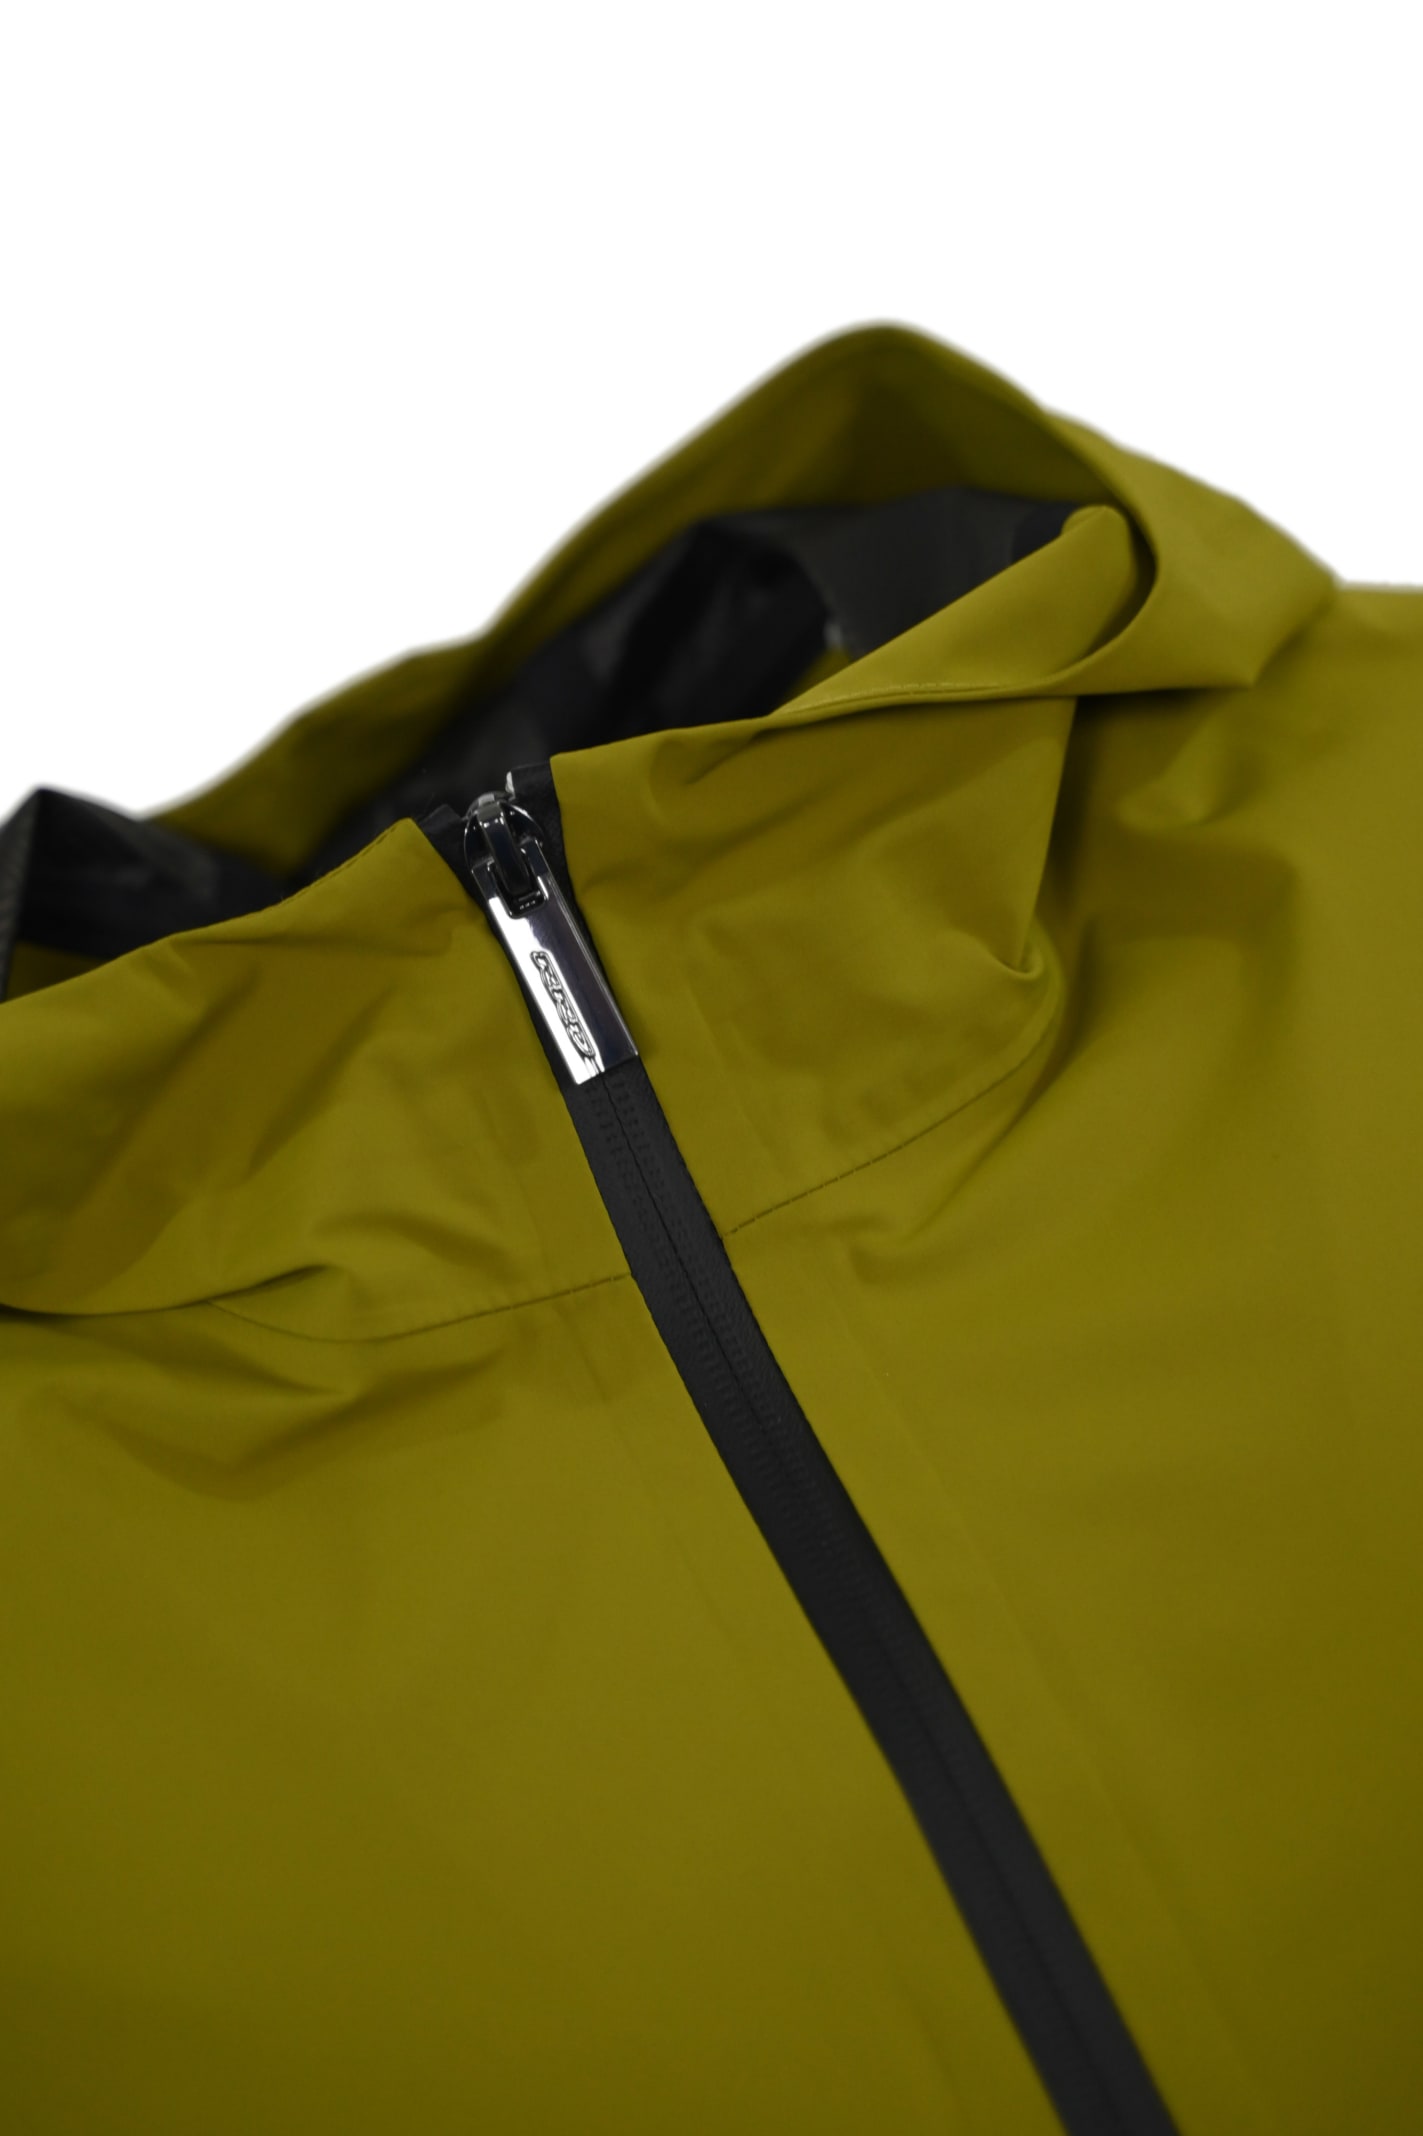 Shop Rrd - Roberto Ricci Design Summer Urban Jacket Blazer In Verde Acido